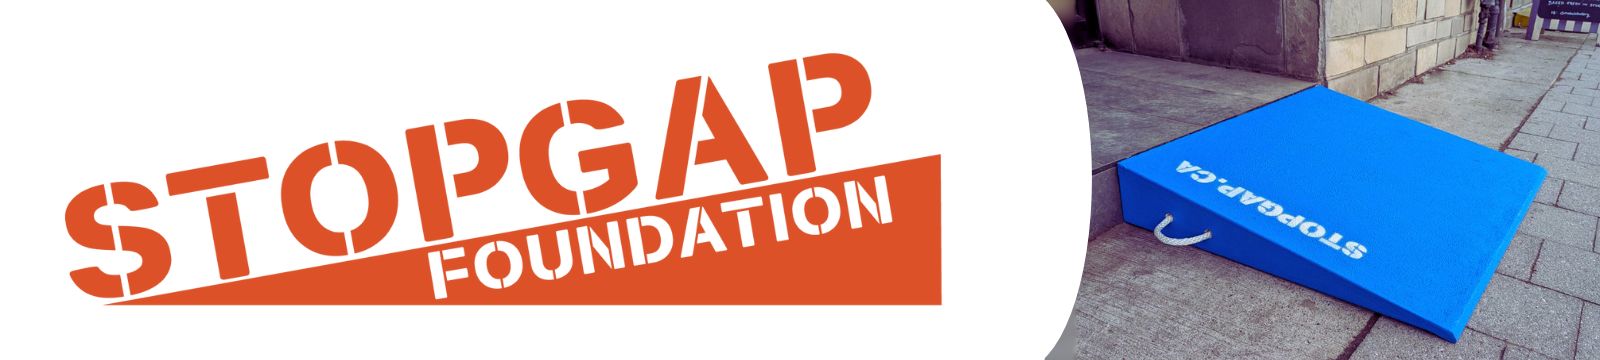 StopGap Foundation logo with blue stopgap ramp